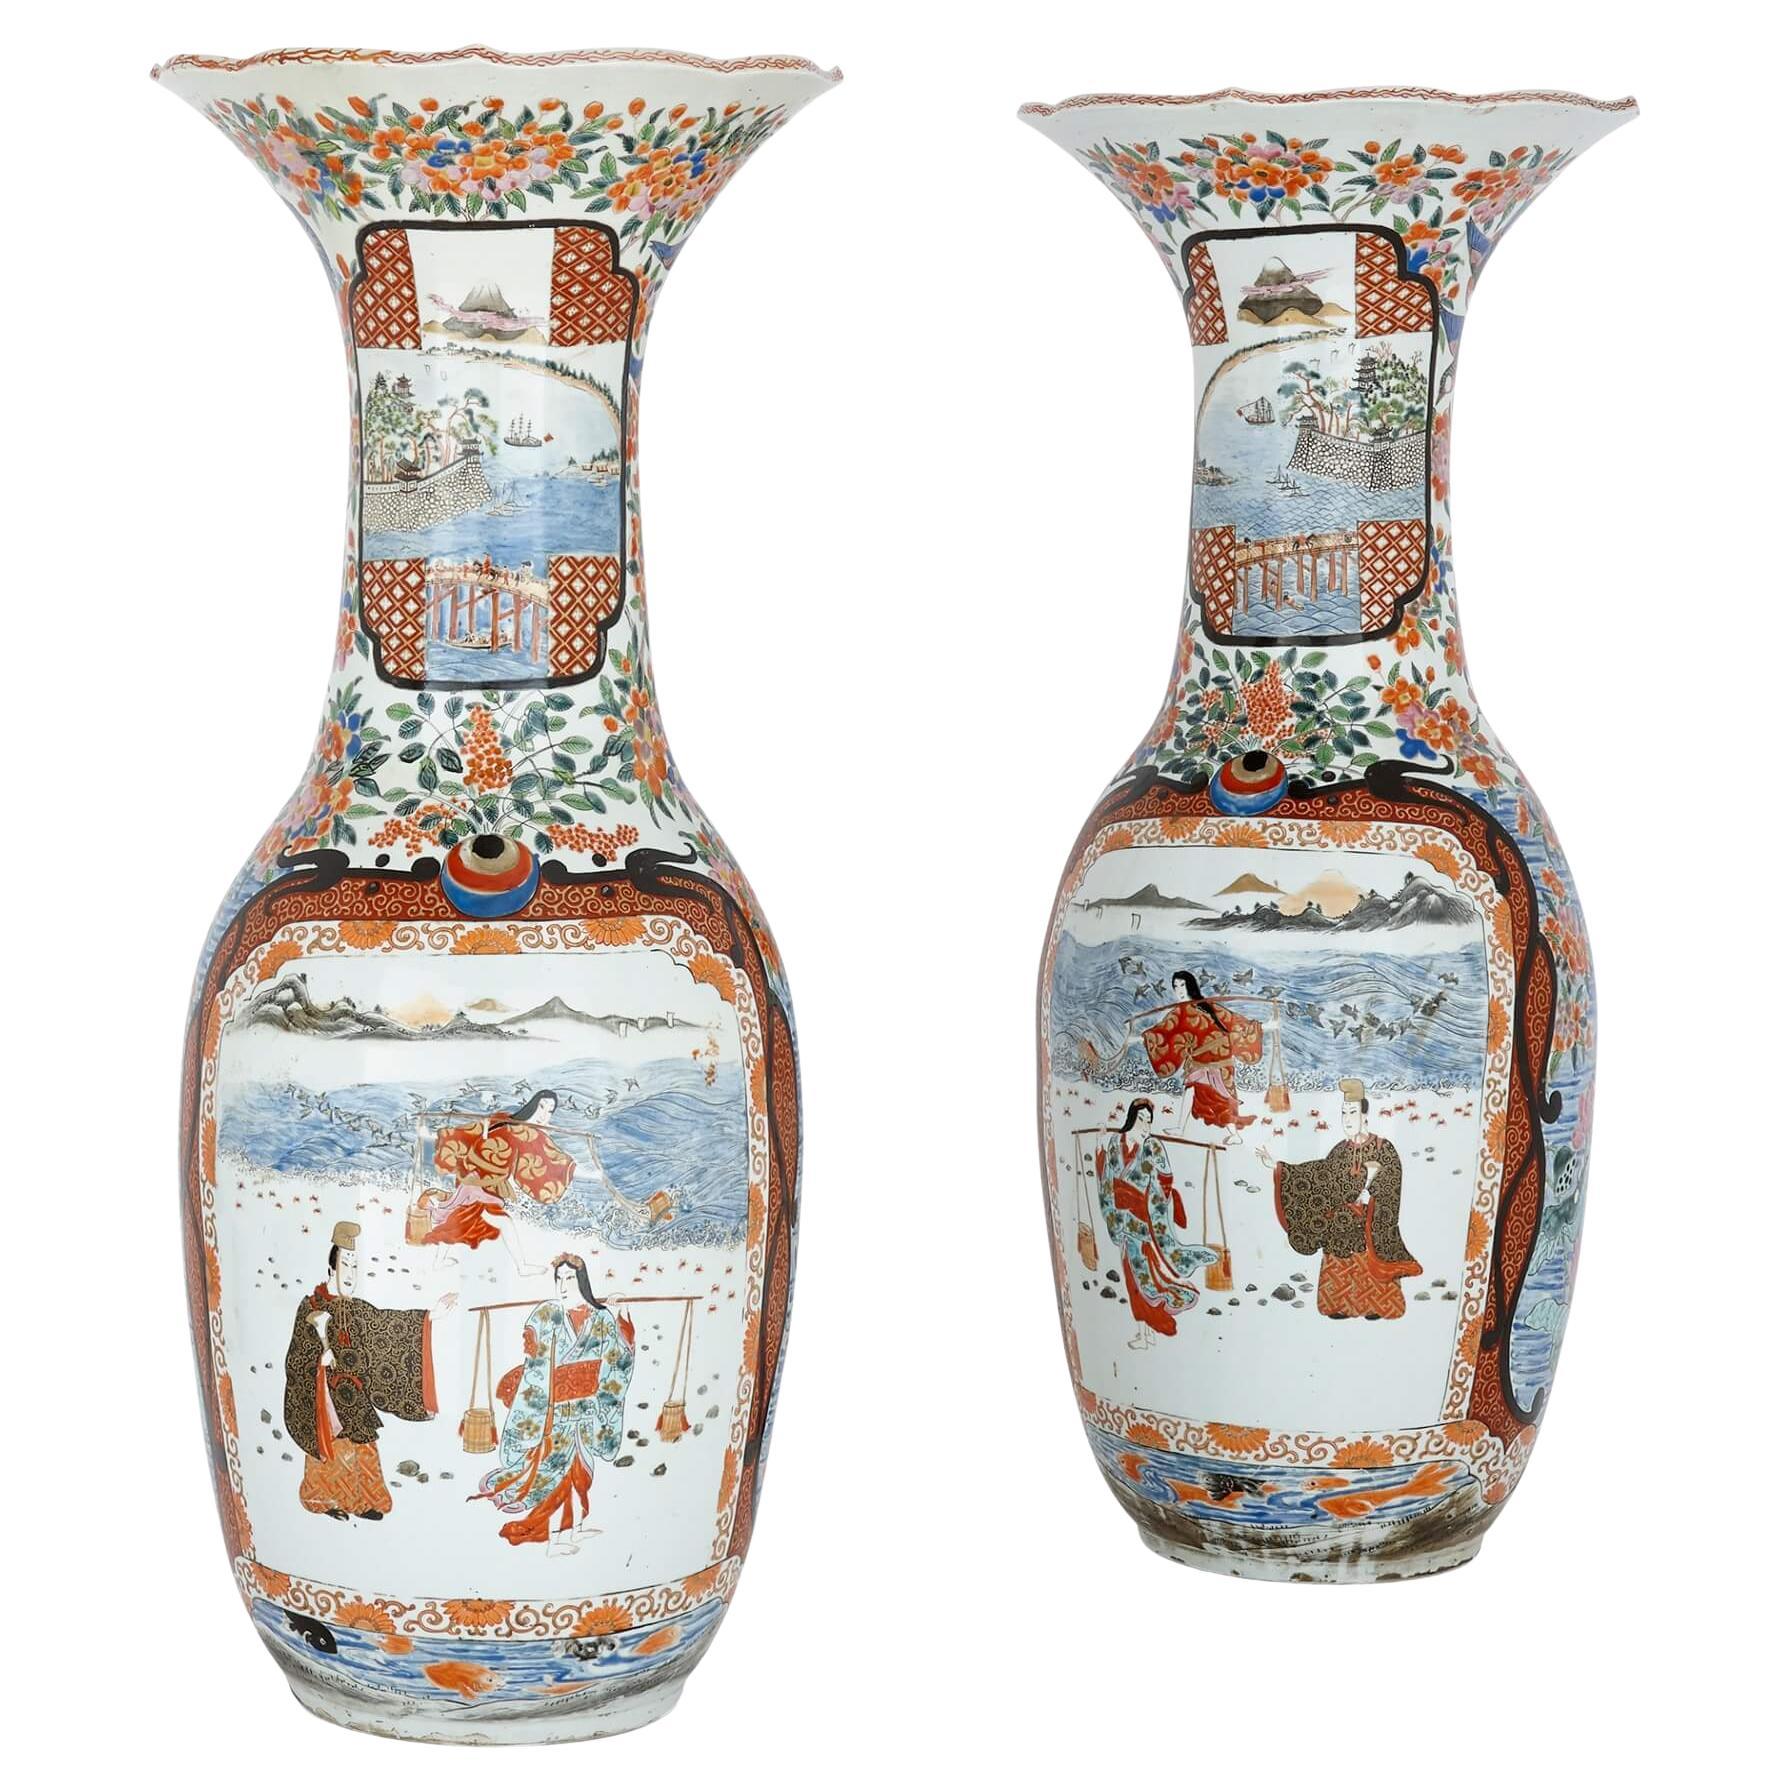 Pair of antique Japanese porcelain vases